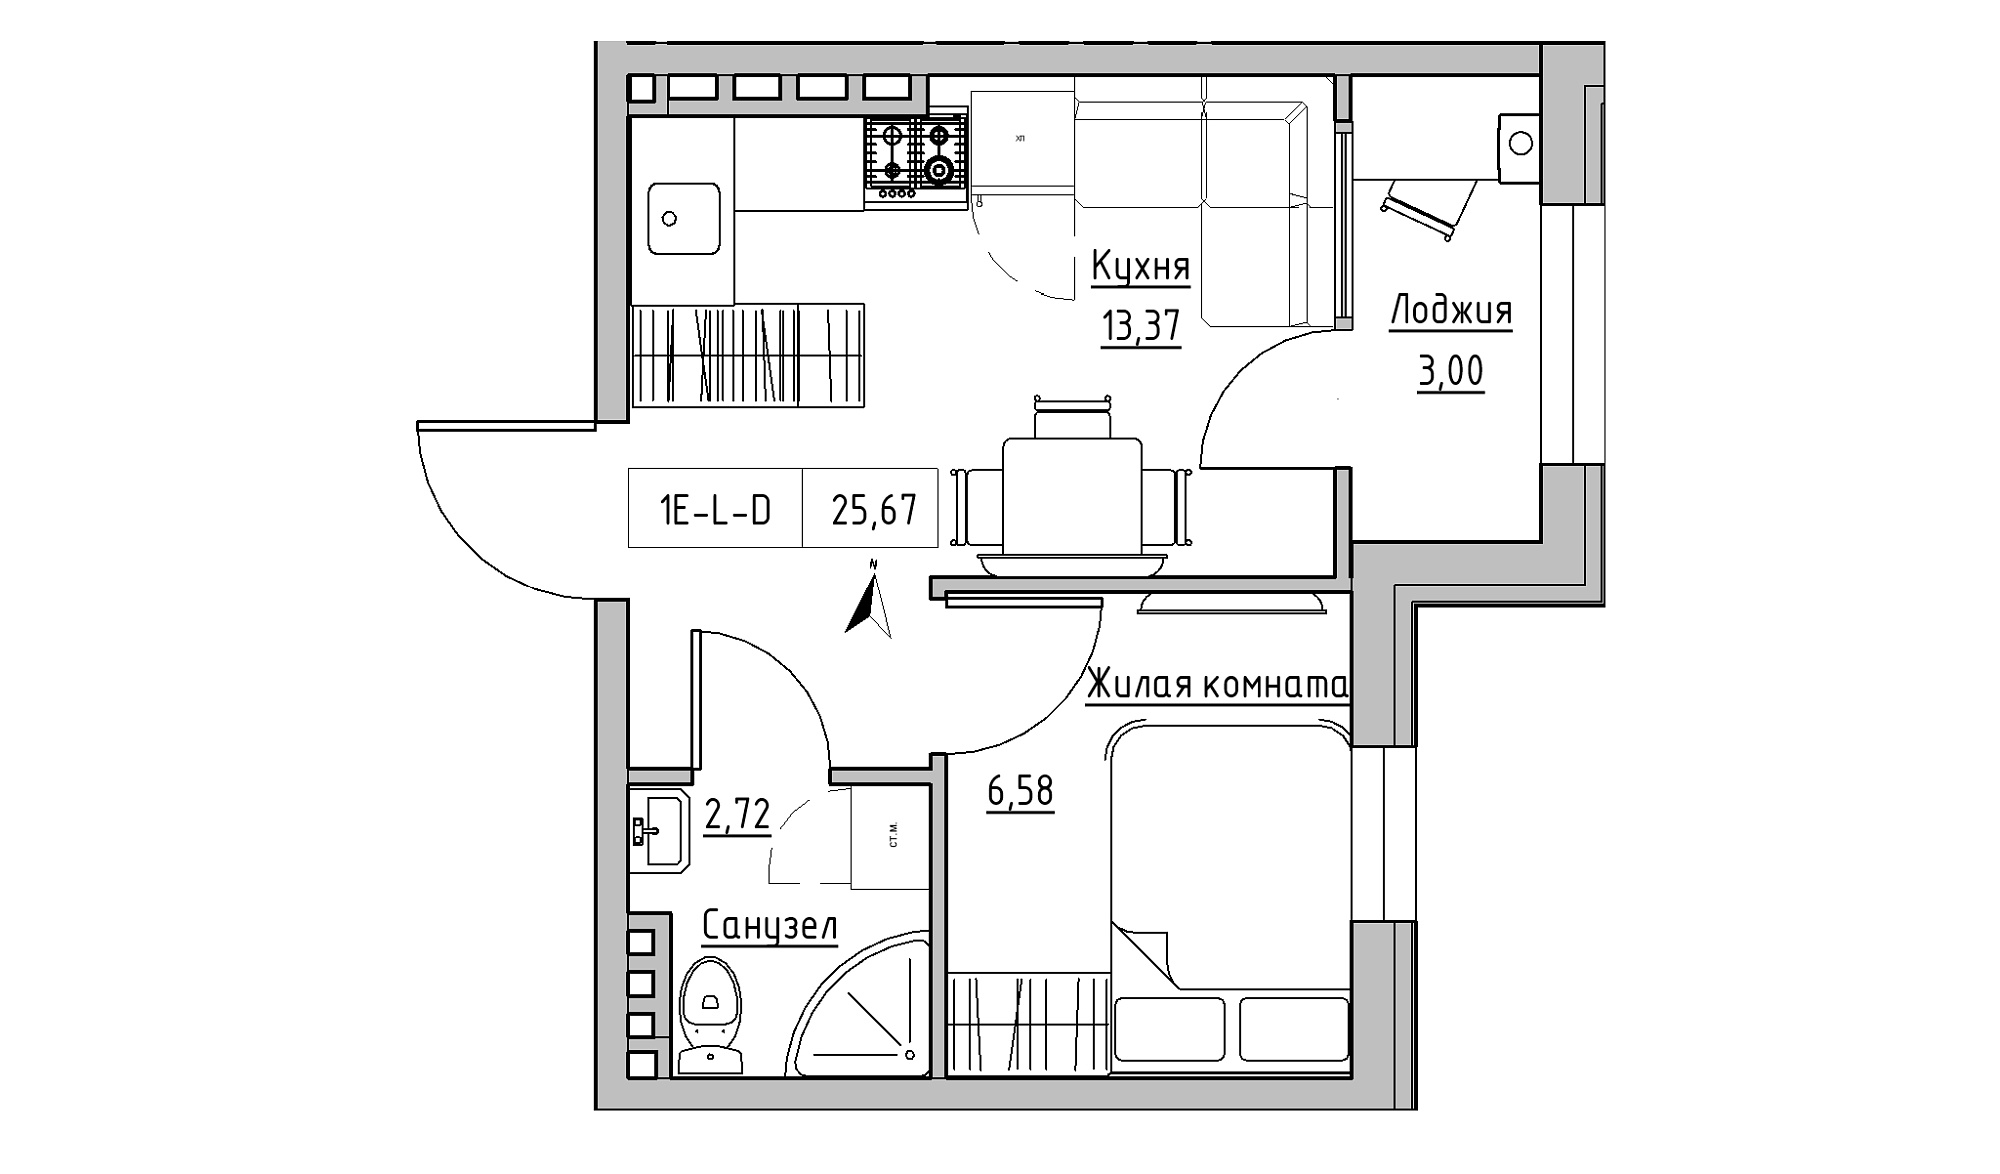 Planning 1-rm flats area 25.67m2, KS-024-05/0018.